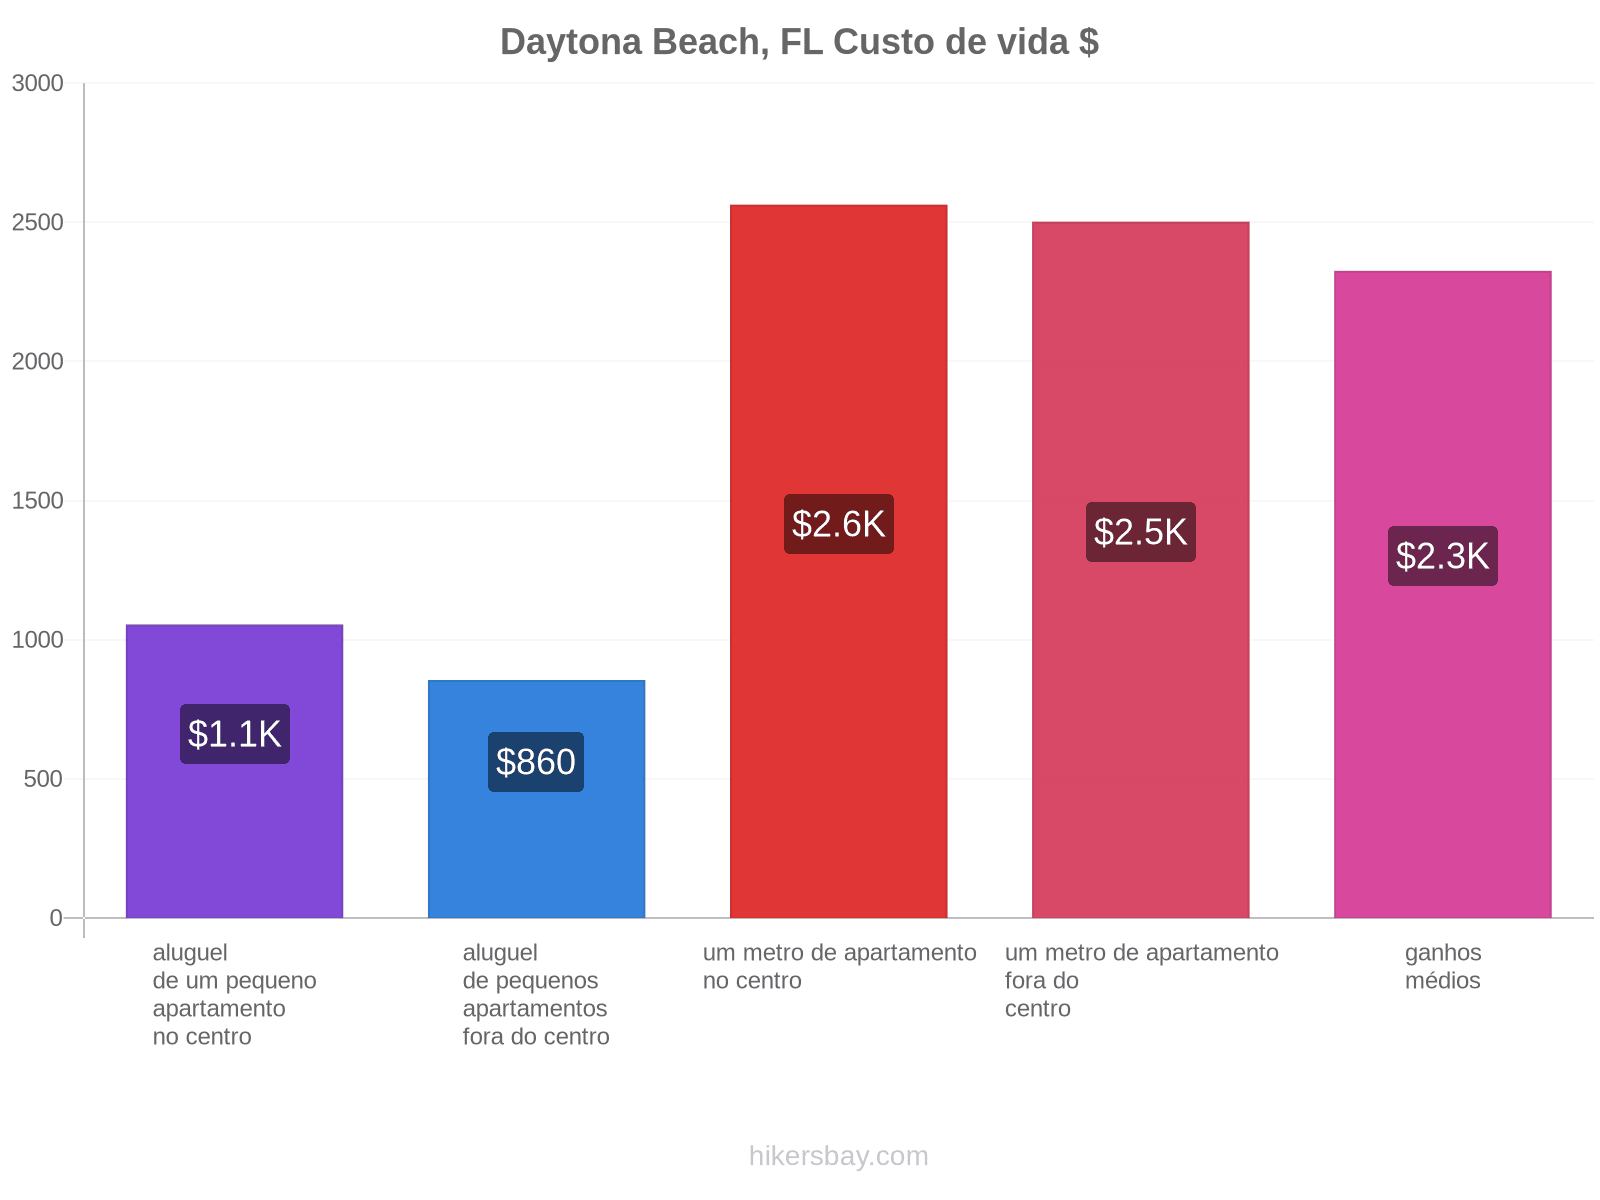 Daytona Beach, FL custo de vida hikersbay.com